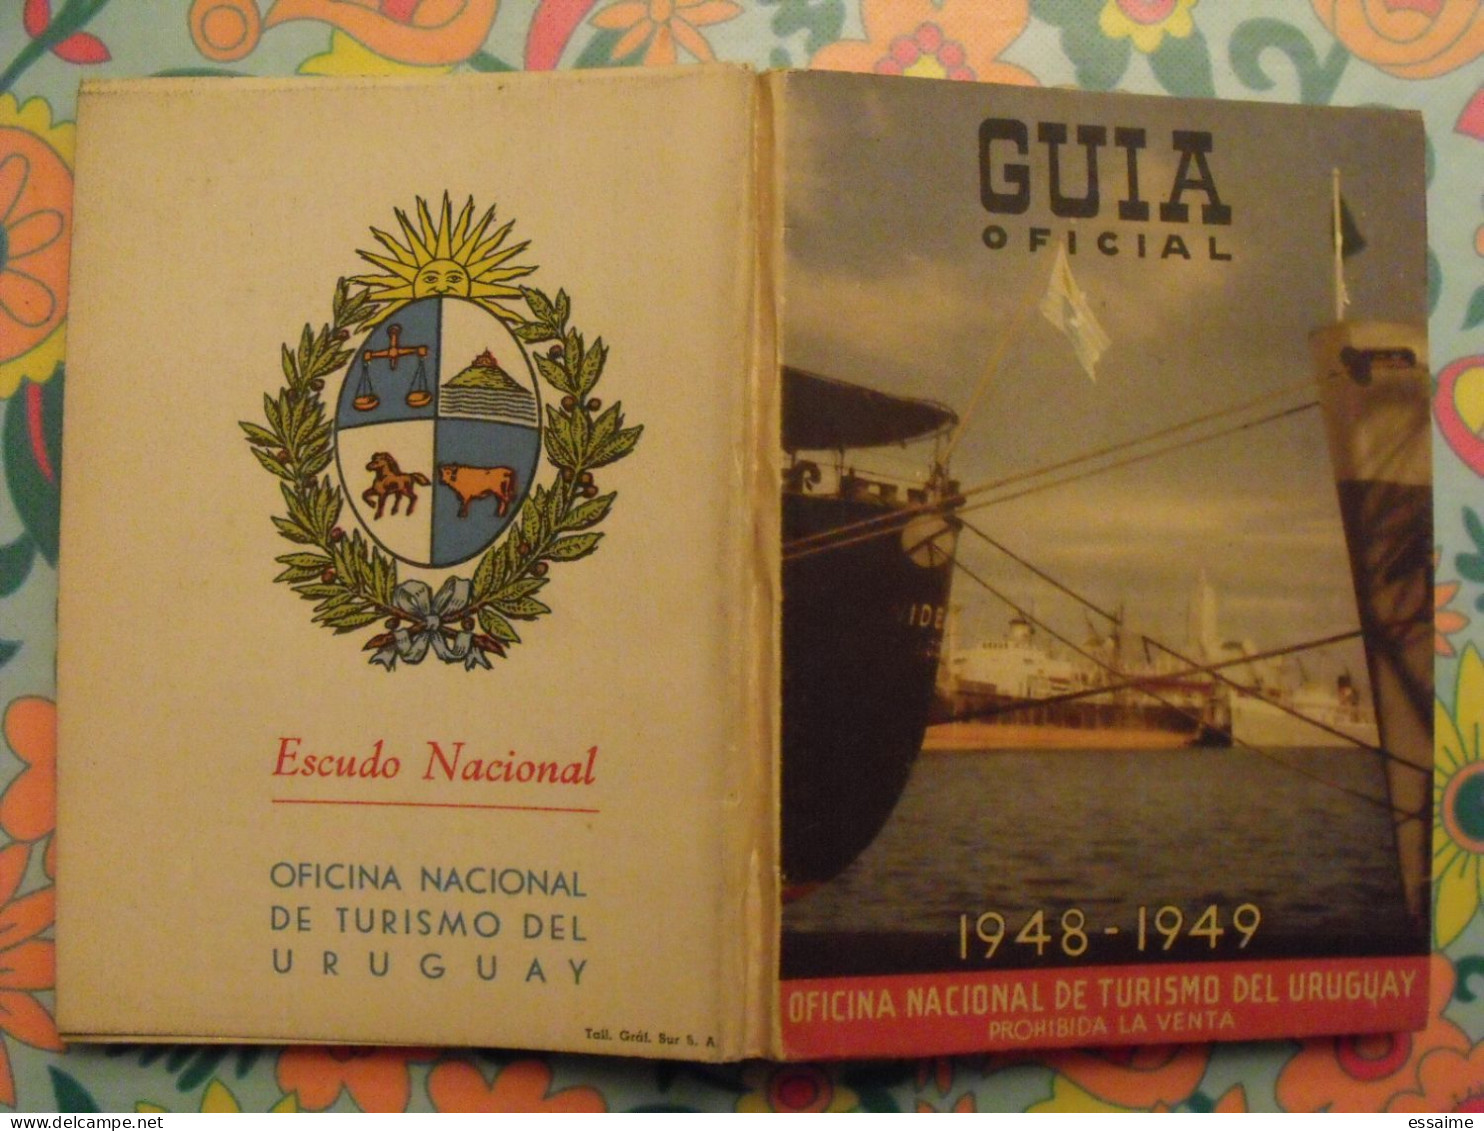 Guia Oficial Uruguay 1948-1949. Oficina Nacional De Turismo. Montevideo, Colonia. Sd (vers 1930) - Cultural